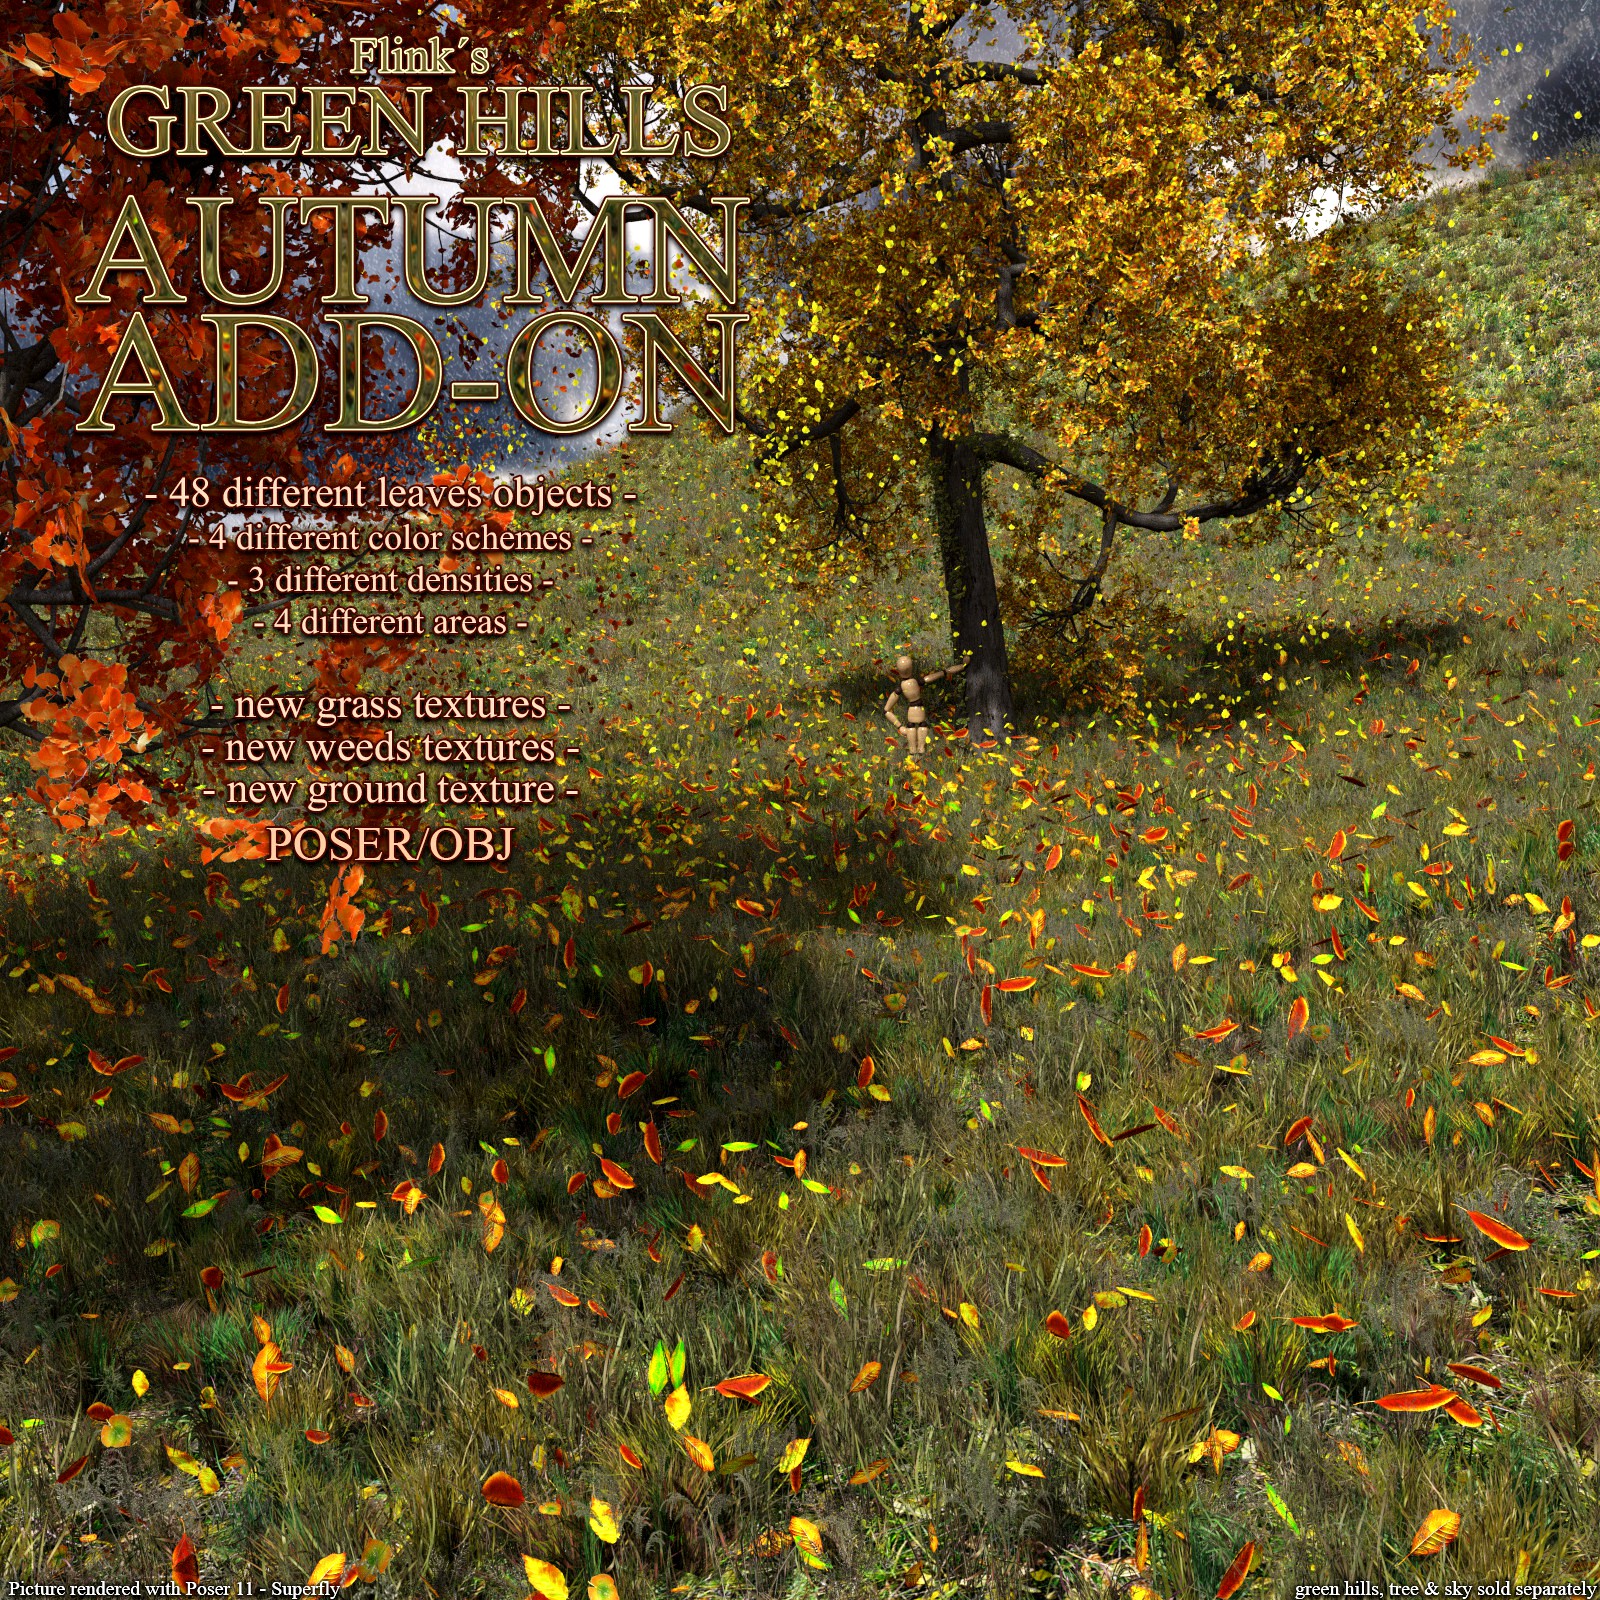 Flinks Green Hills - Autumn Add-on